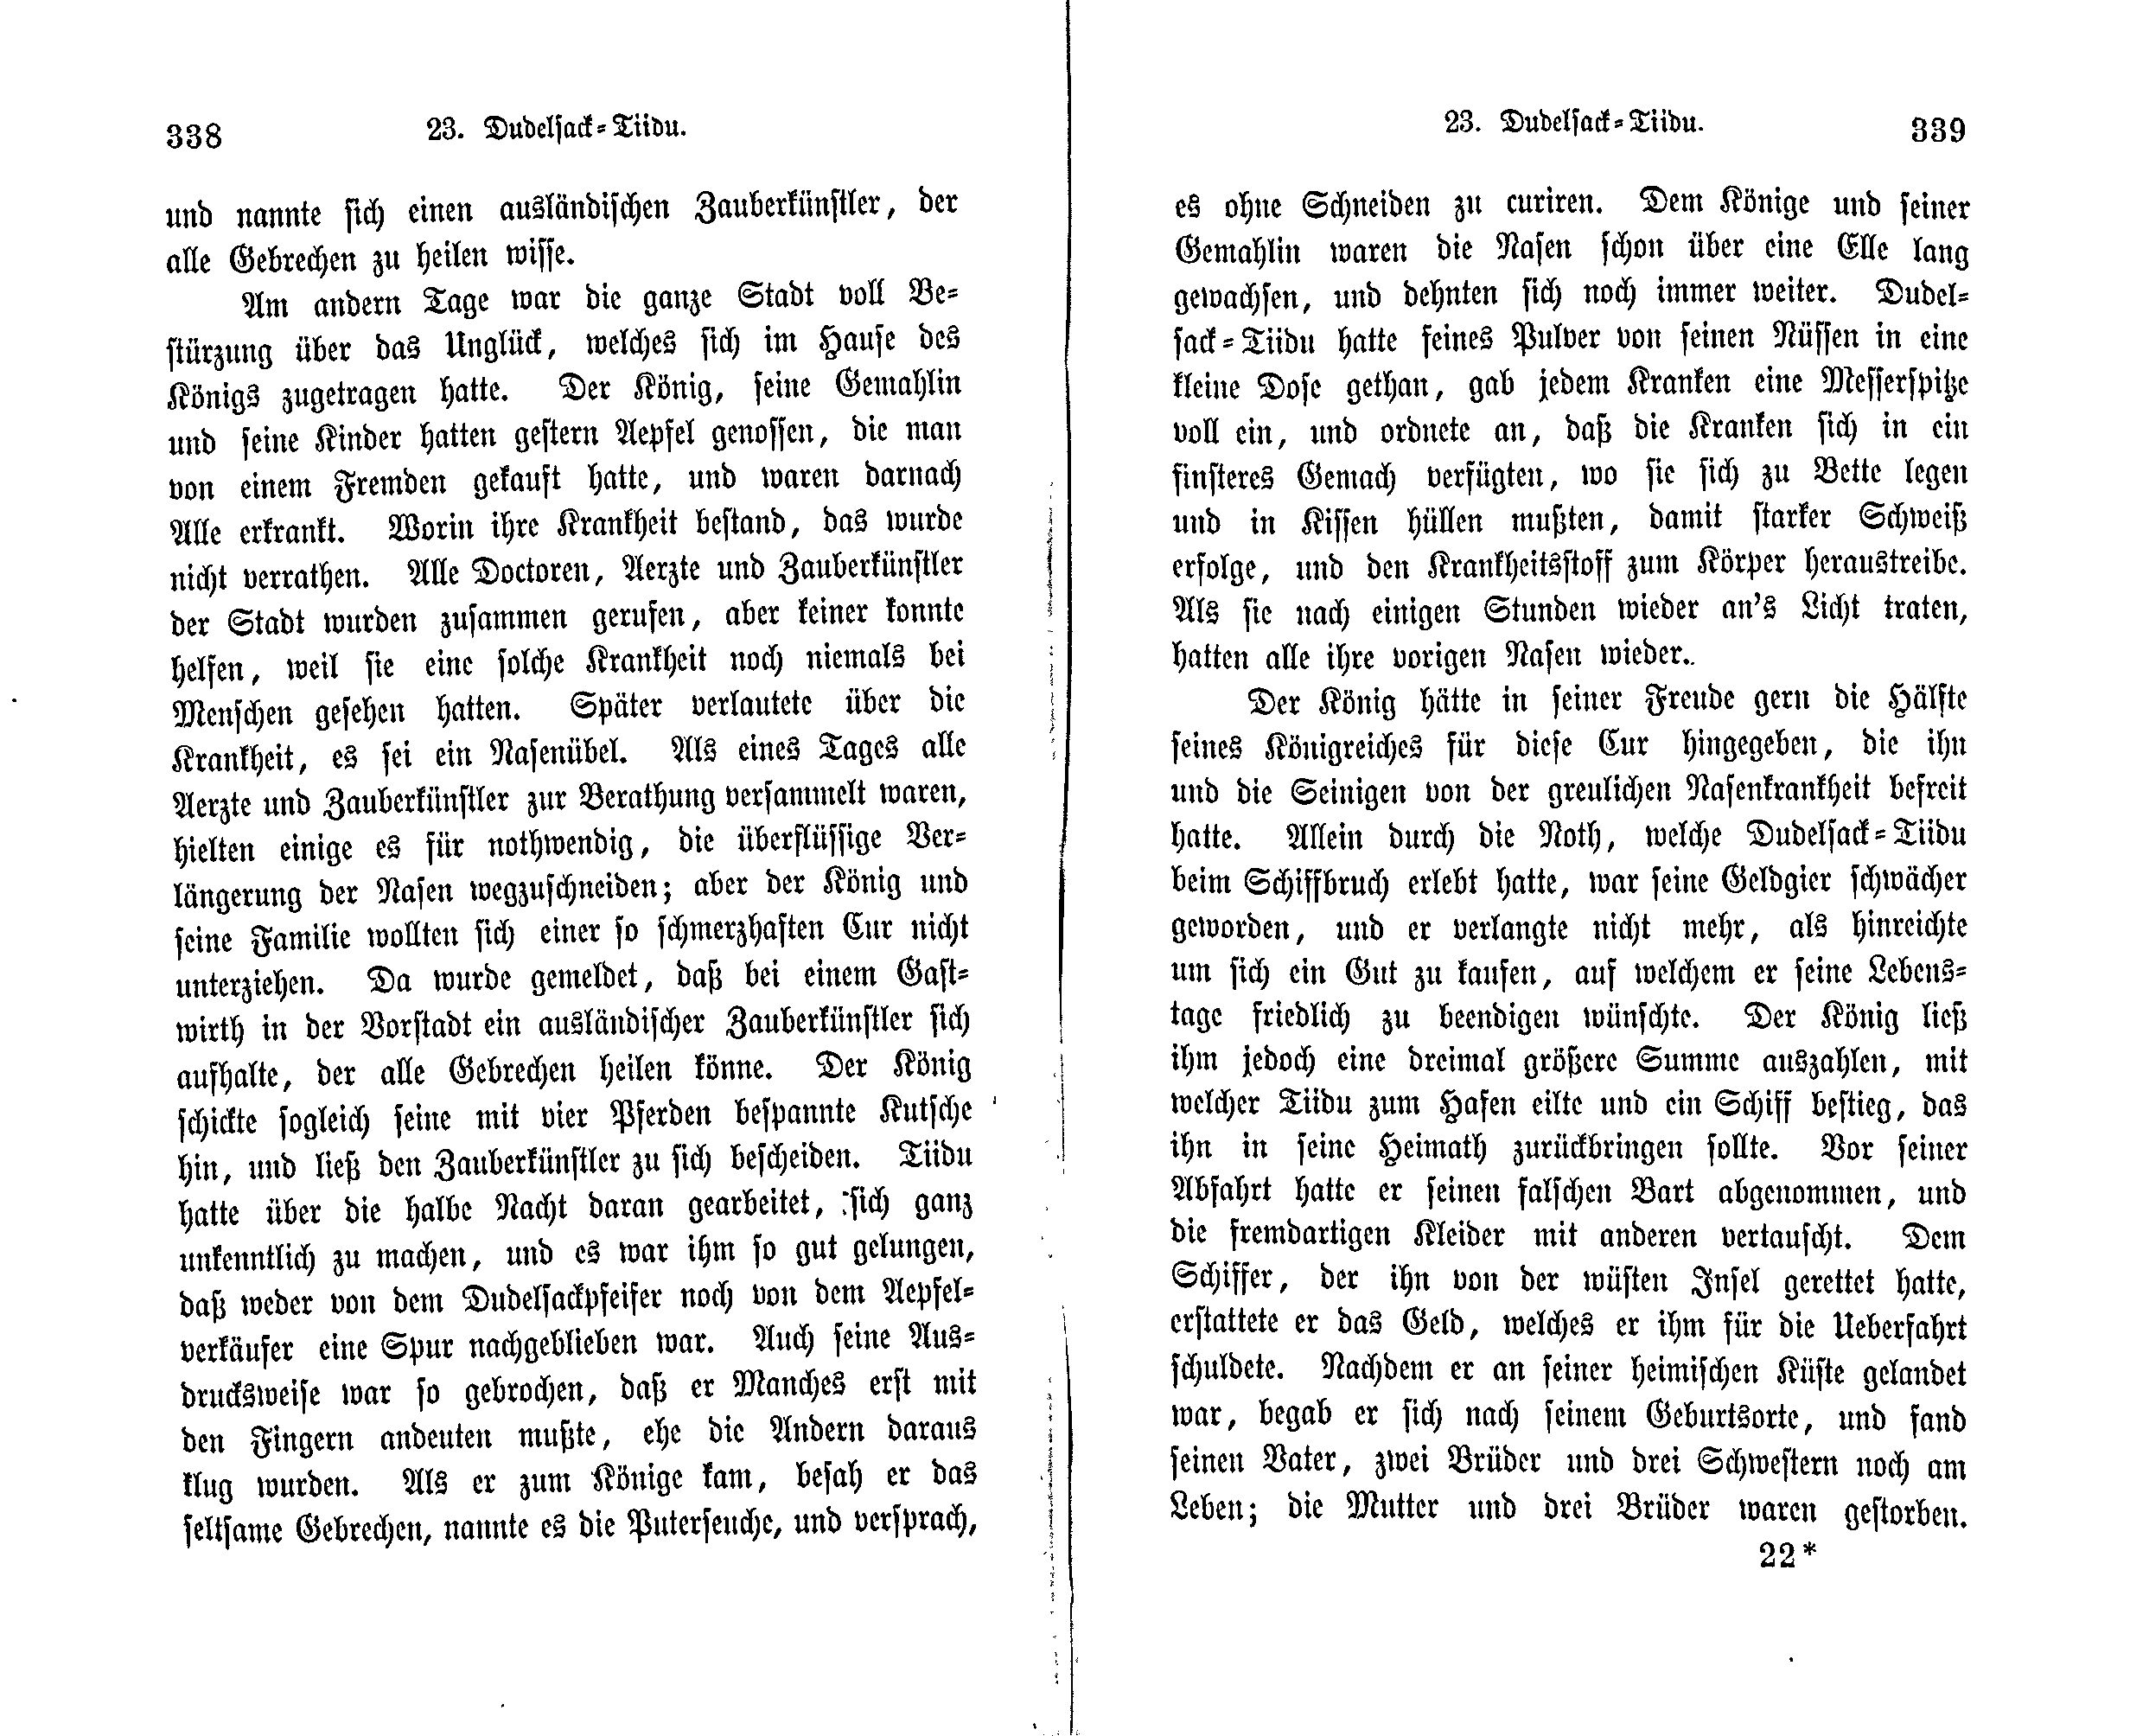 Dudelsack-Tiidu (1869) | 11. (338-339) Main body of text